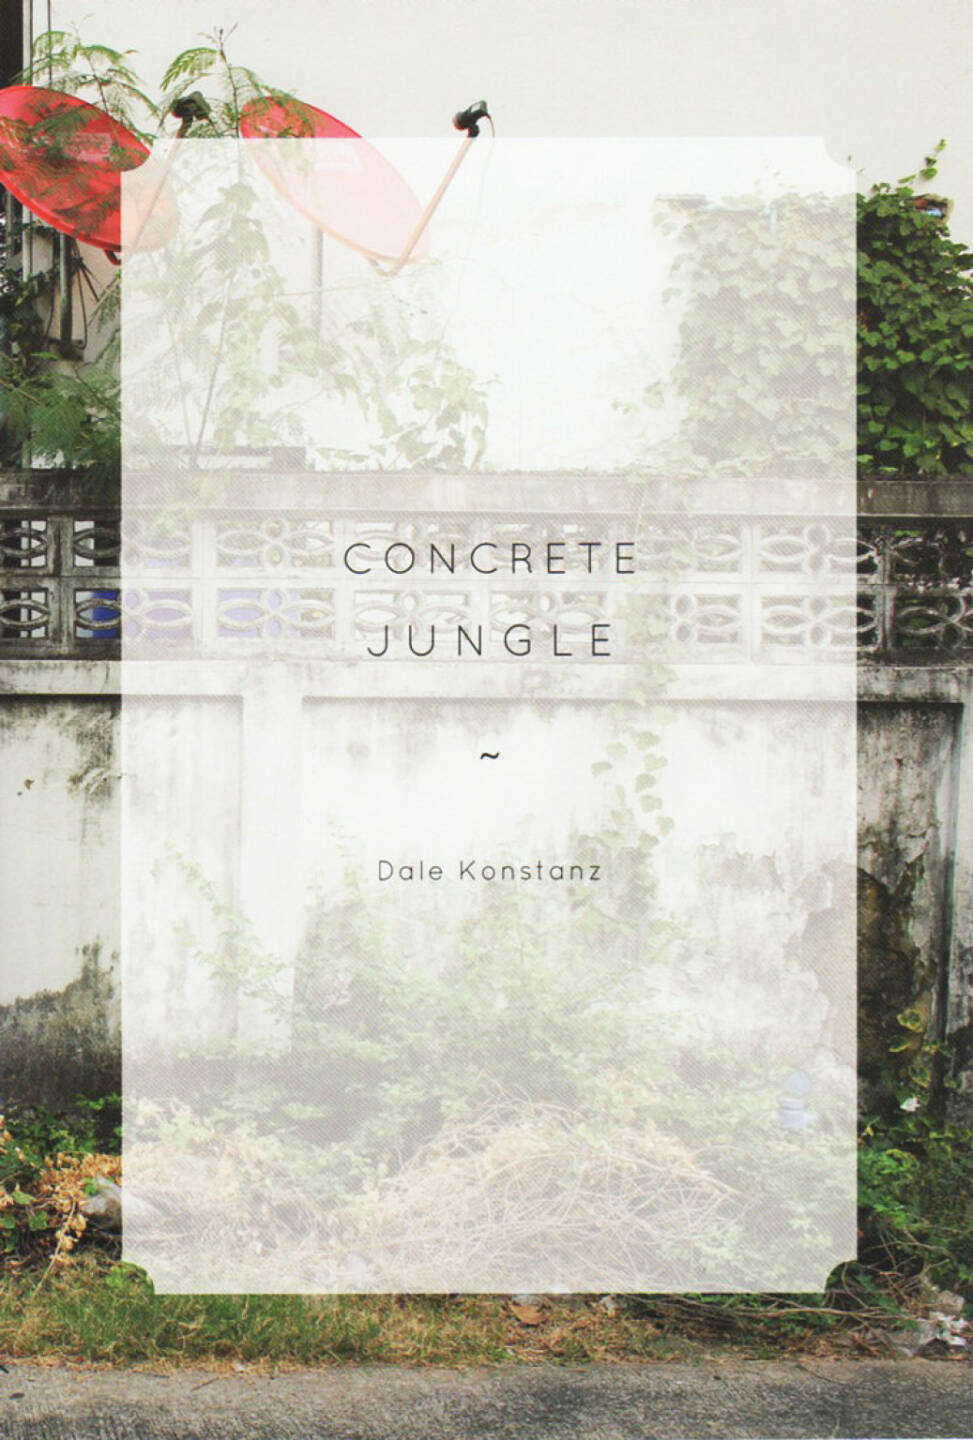 Dale Konstanz - Concrete Jungle, The Velvet Cell 2014, Cover - http://josefchladek.com/book/dale_konstanz_-_concrete_jungle